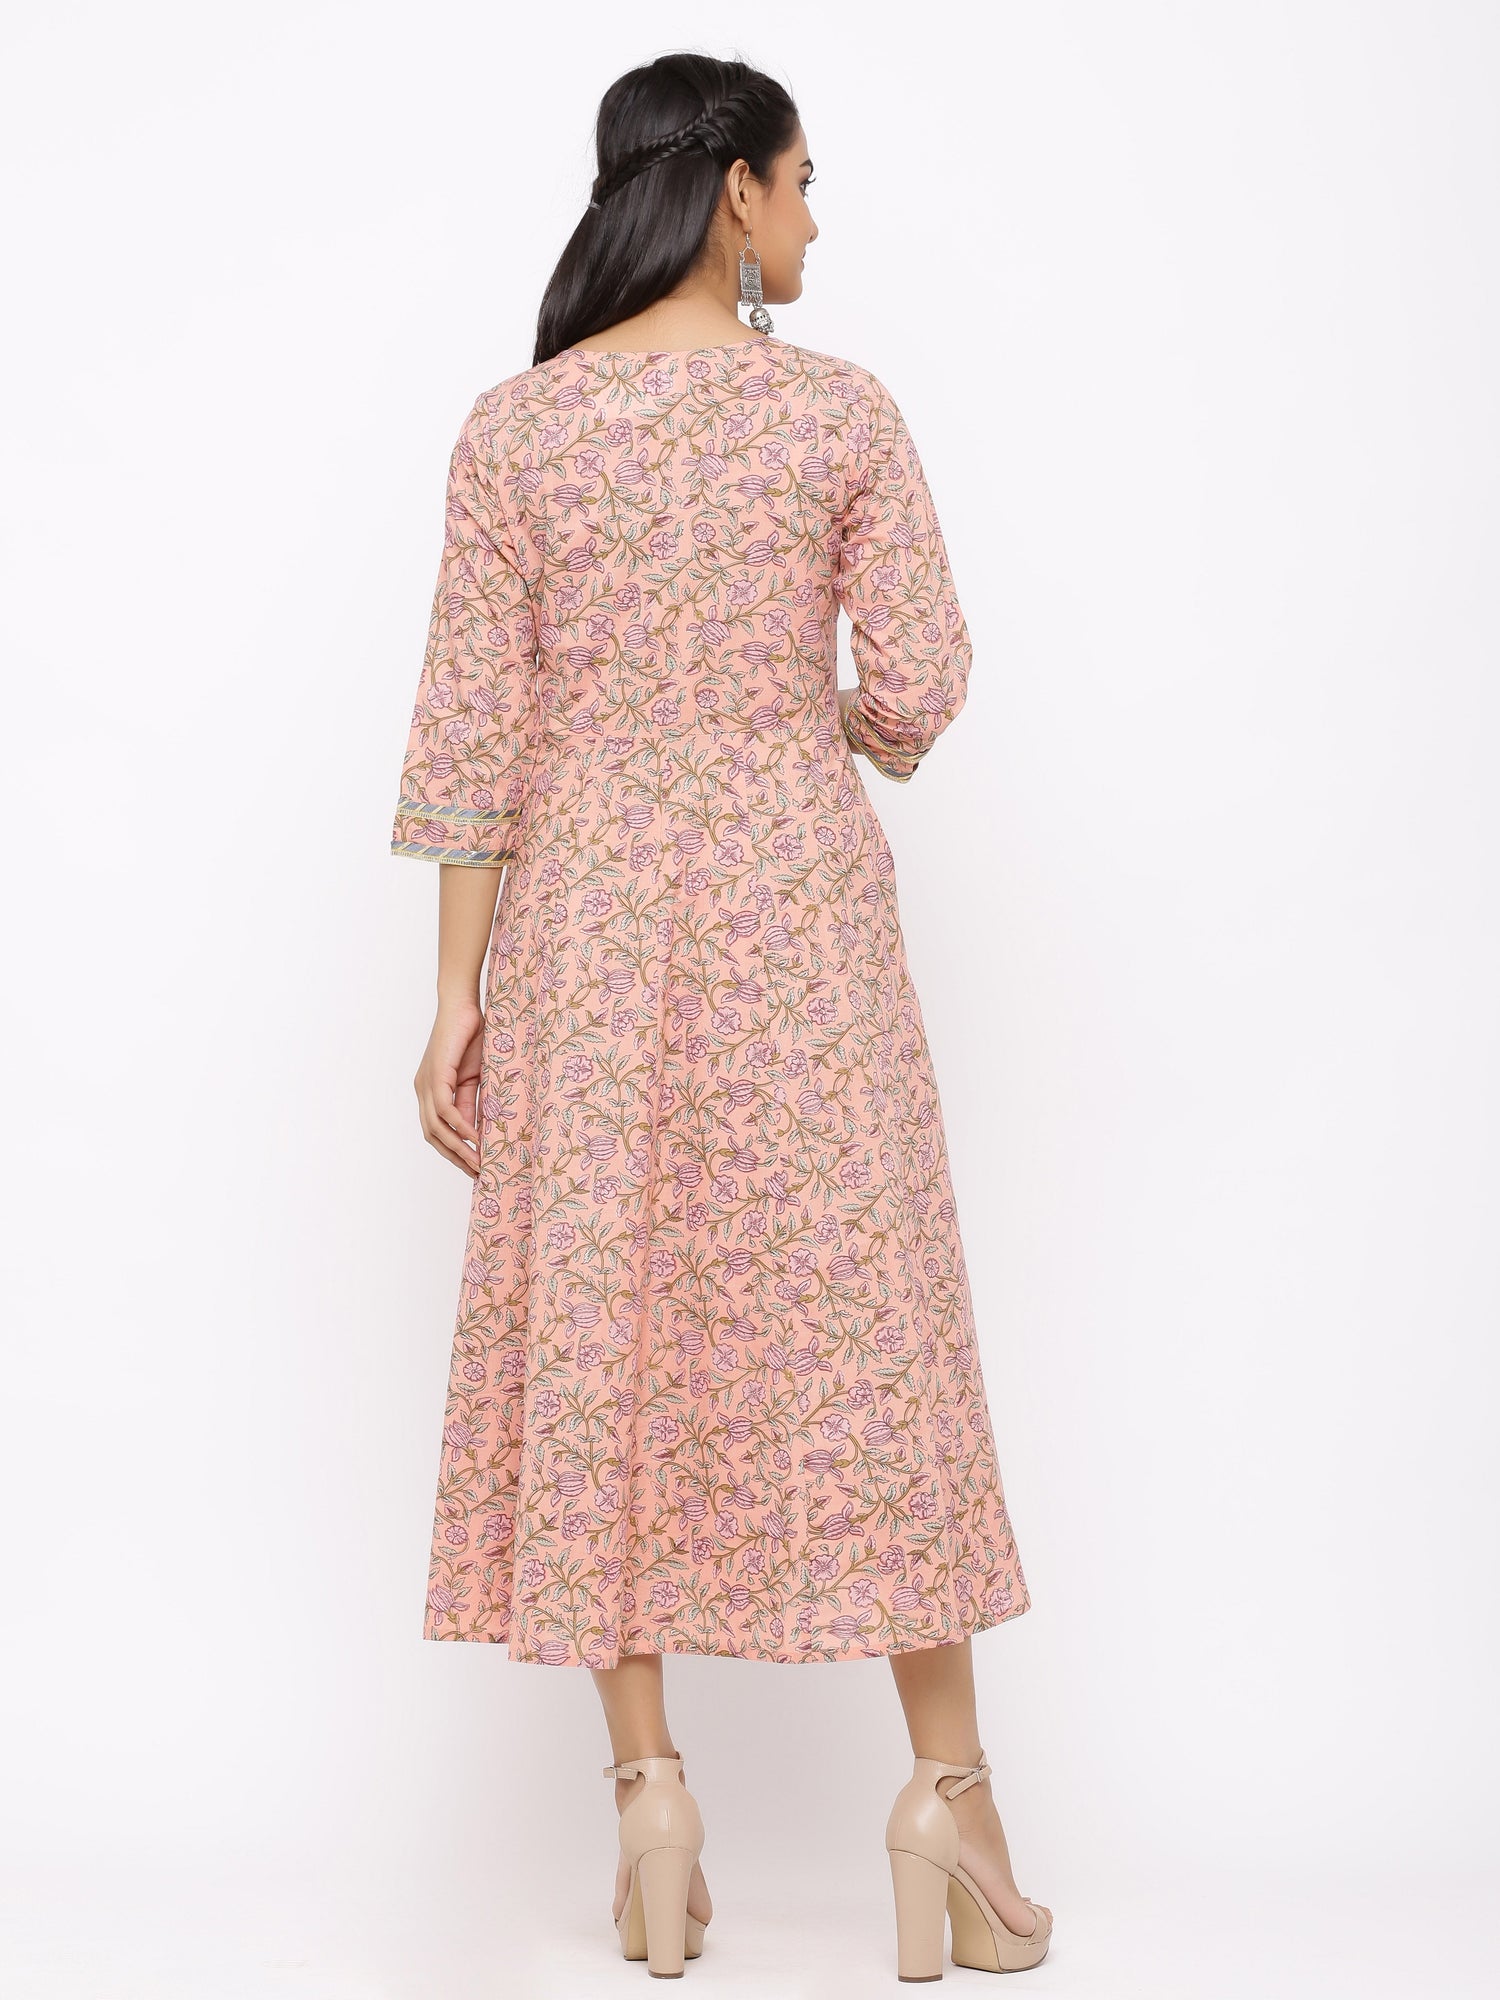 Subtle Pink Iris Cotton Dress - AbirabyBeena